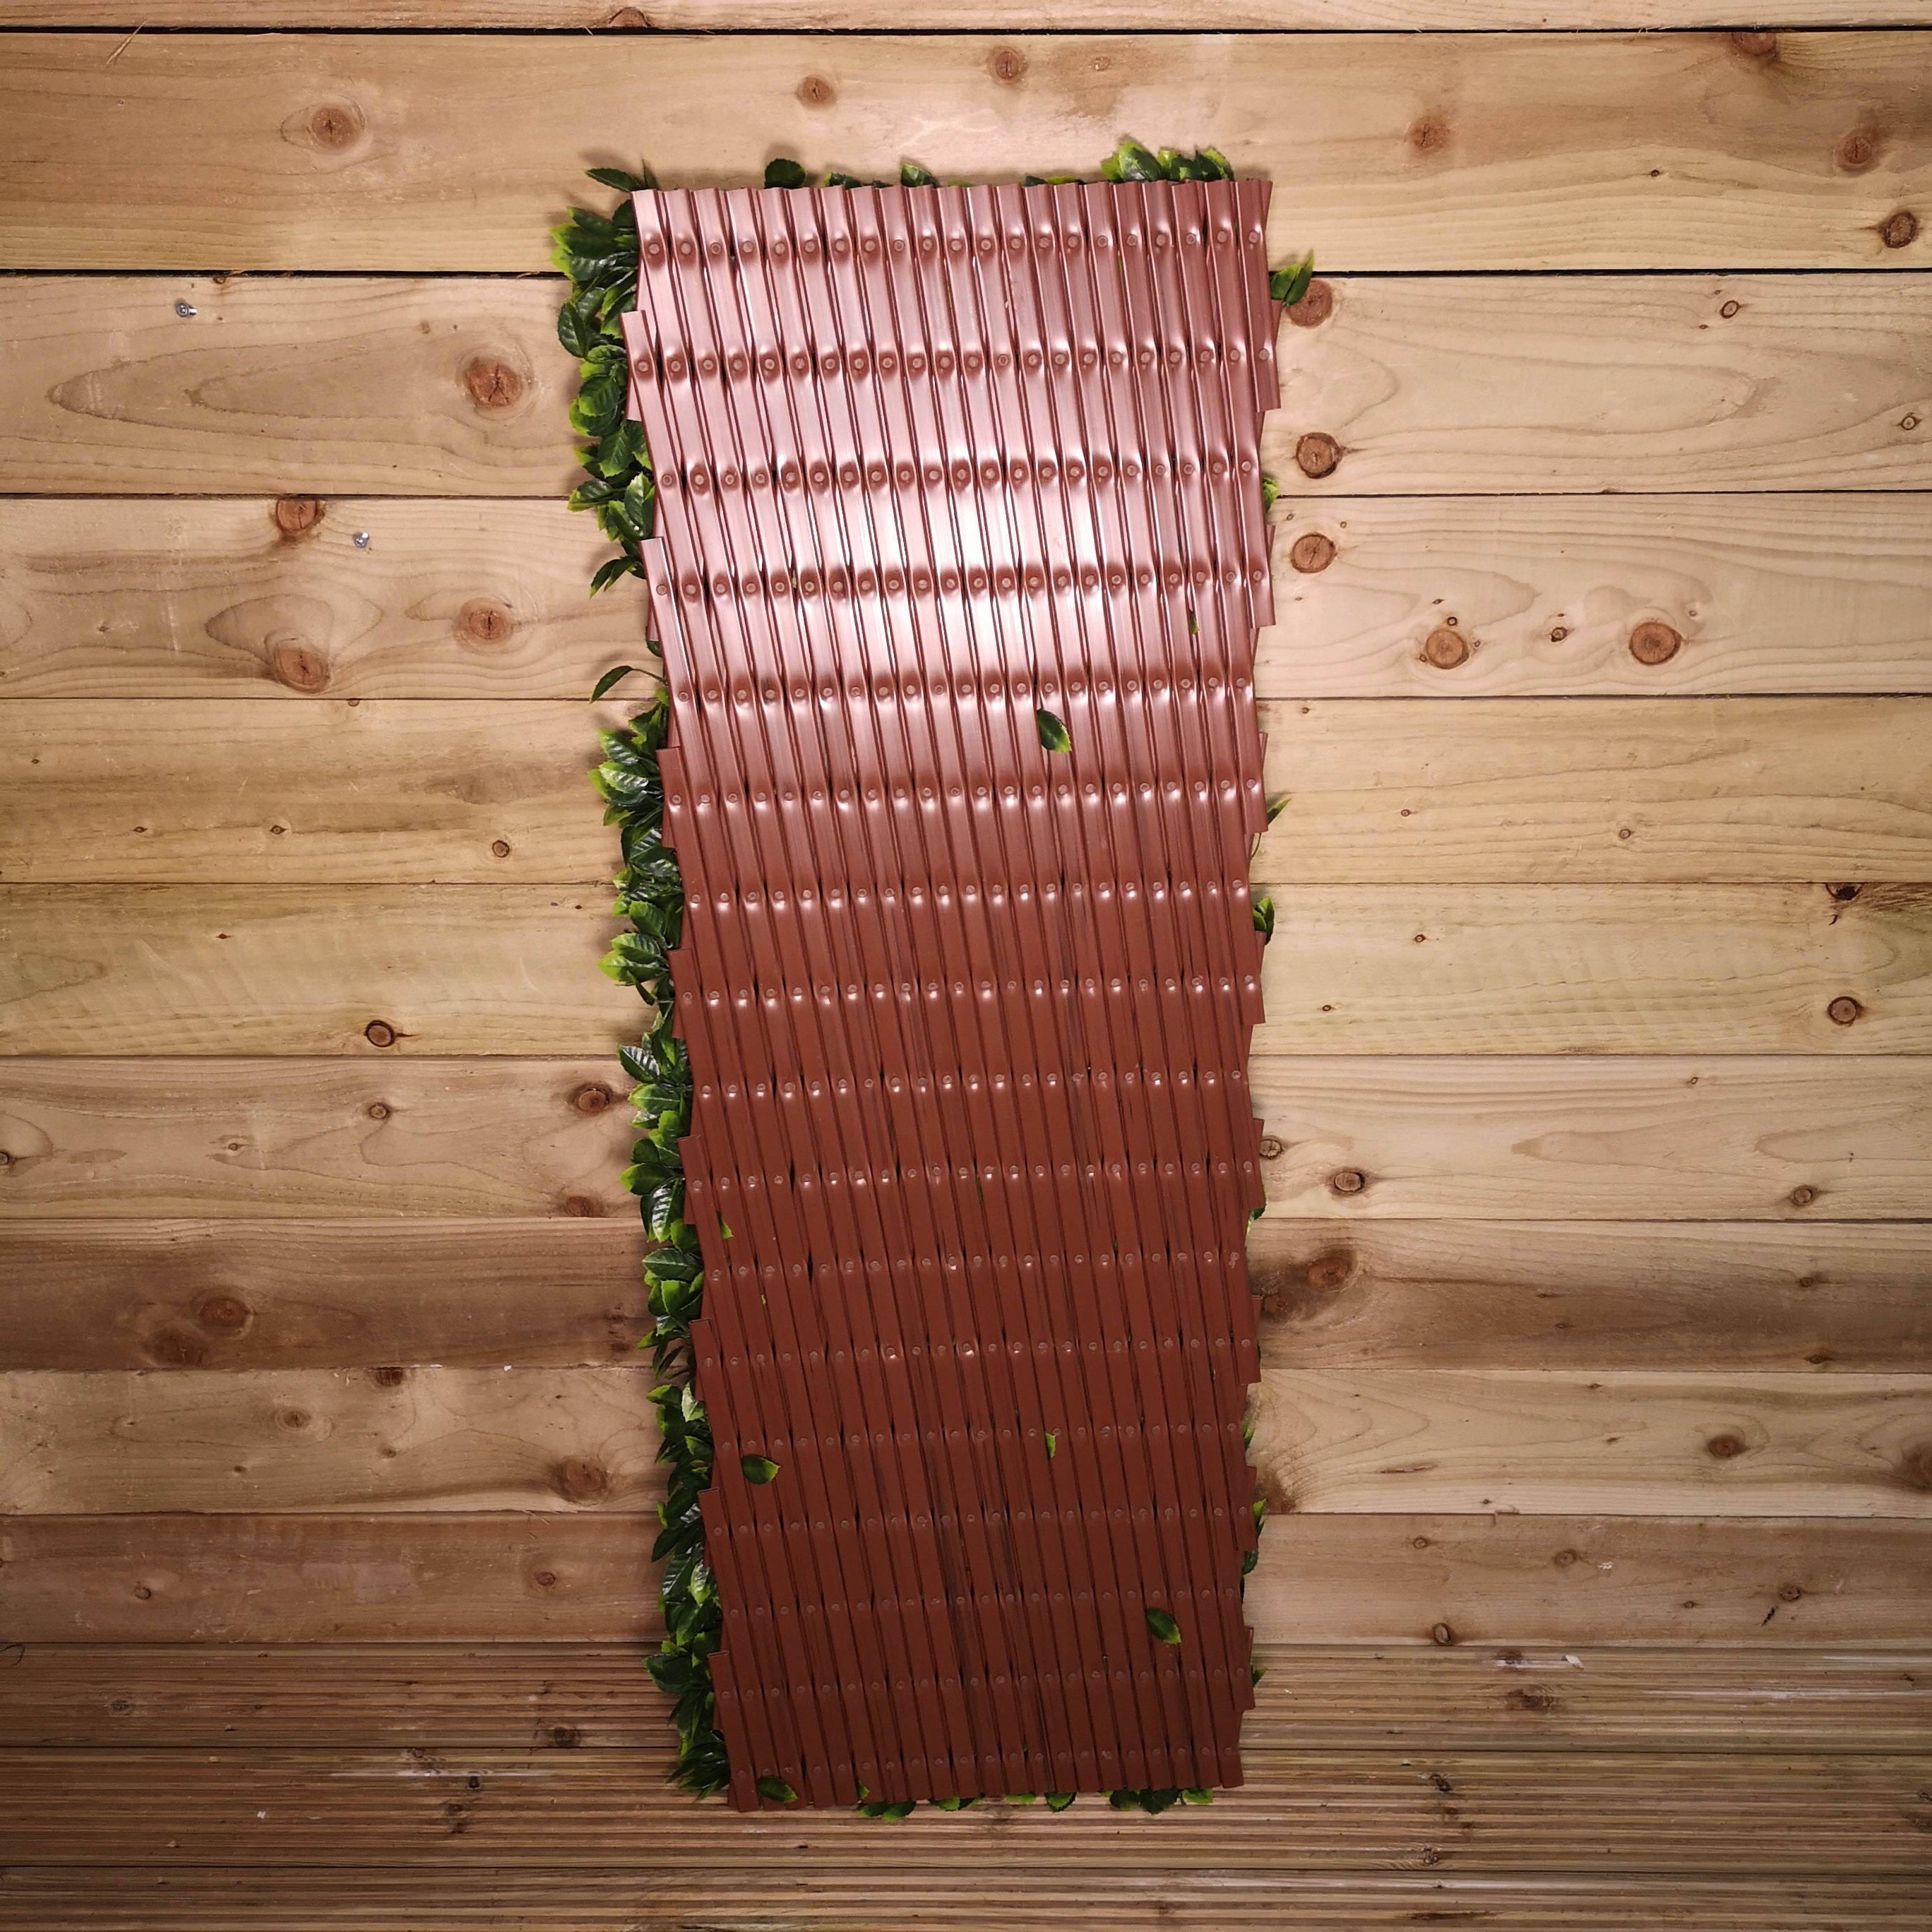 100cm x 200cm PE Backed Artificial Fence Garden Trellis Privacy Screening Indoor Outdoor Wall Panel - Beech Leaf